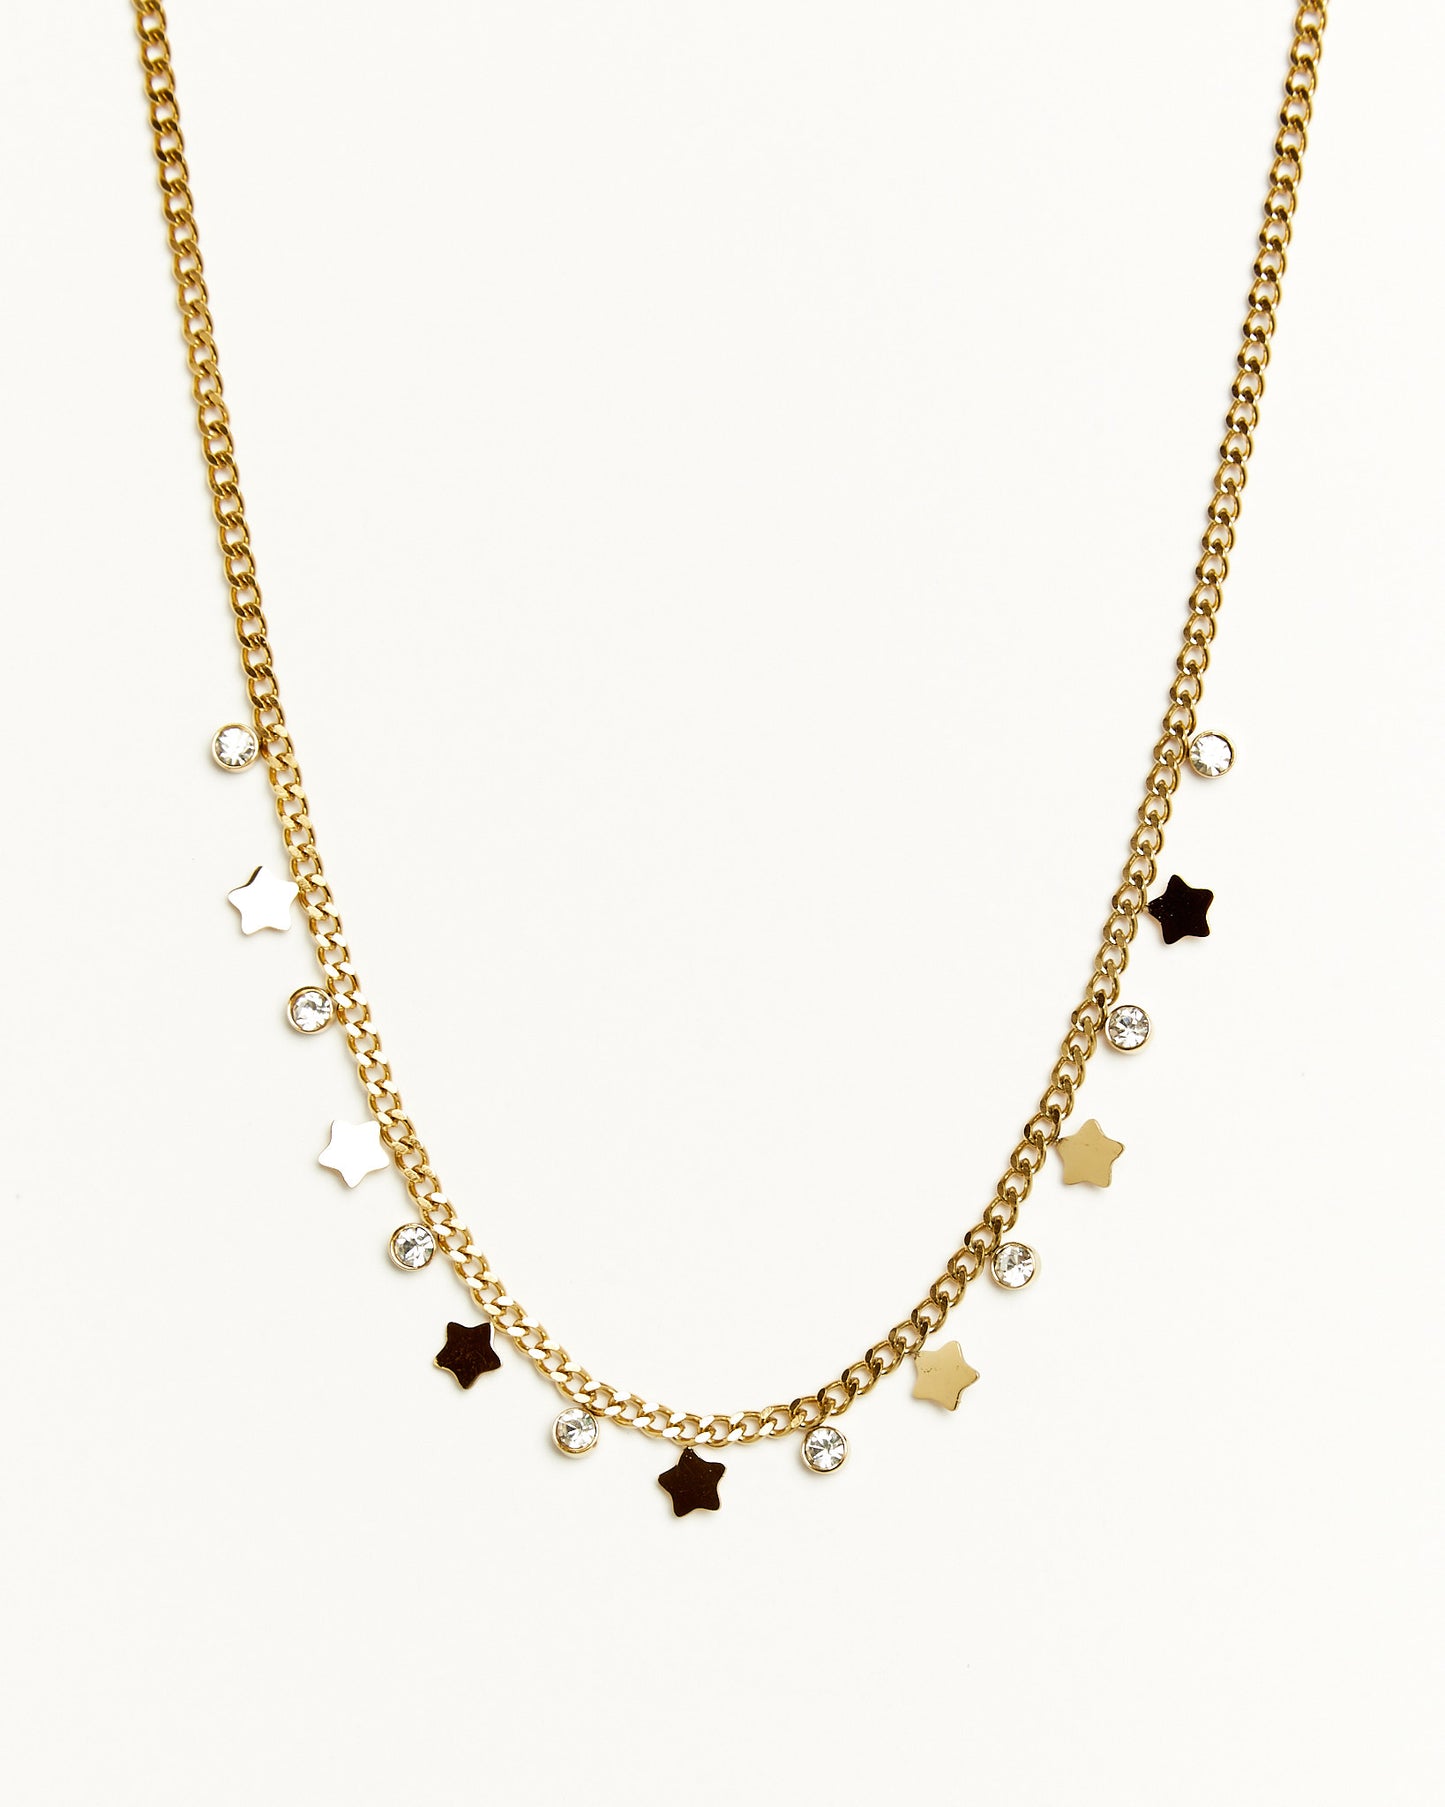 Starry night necklace